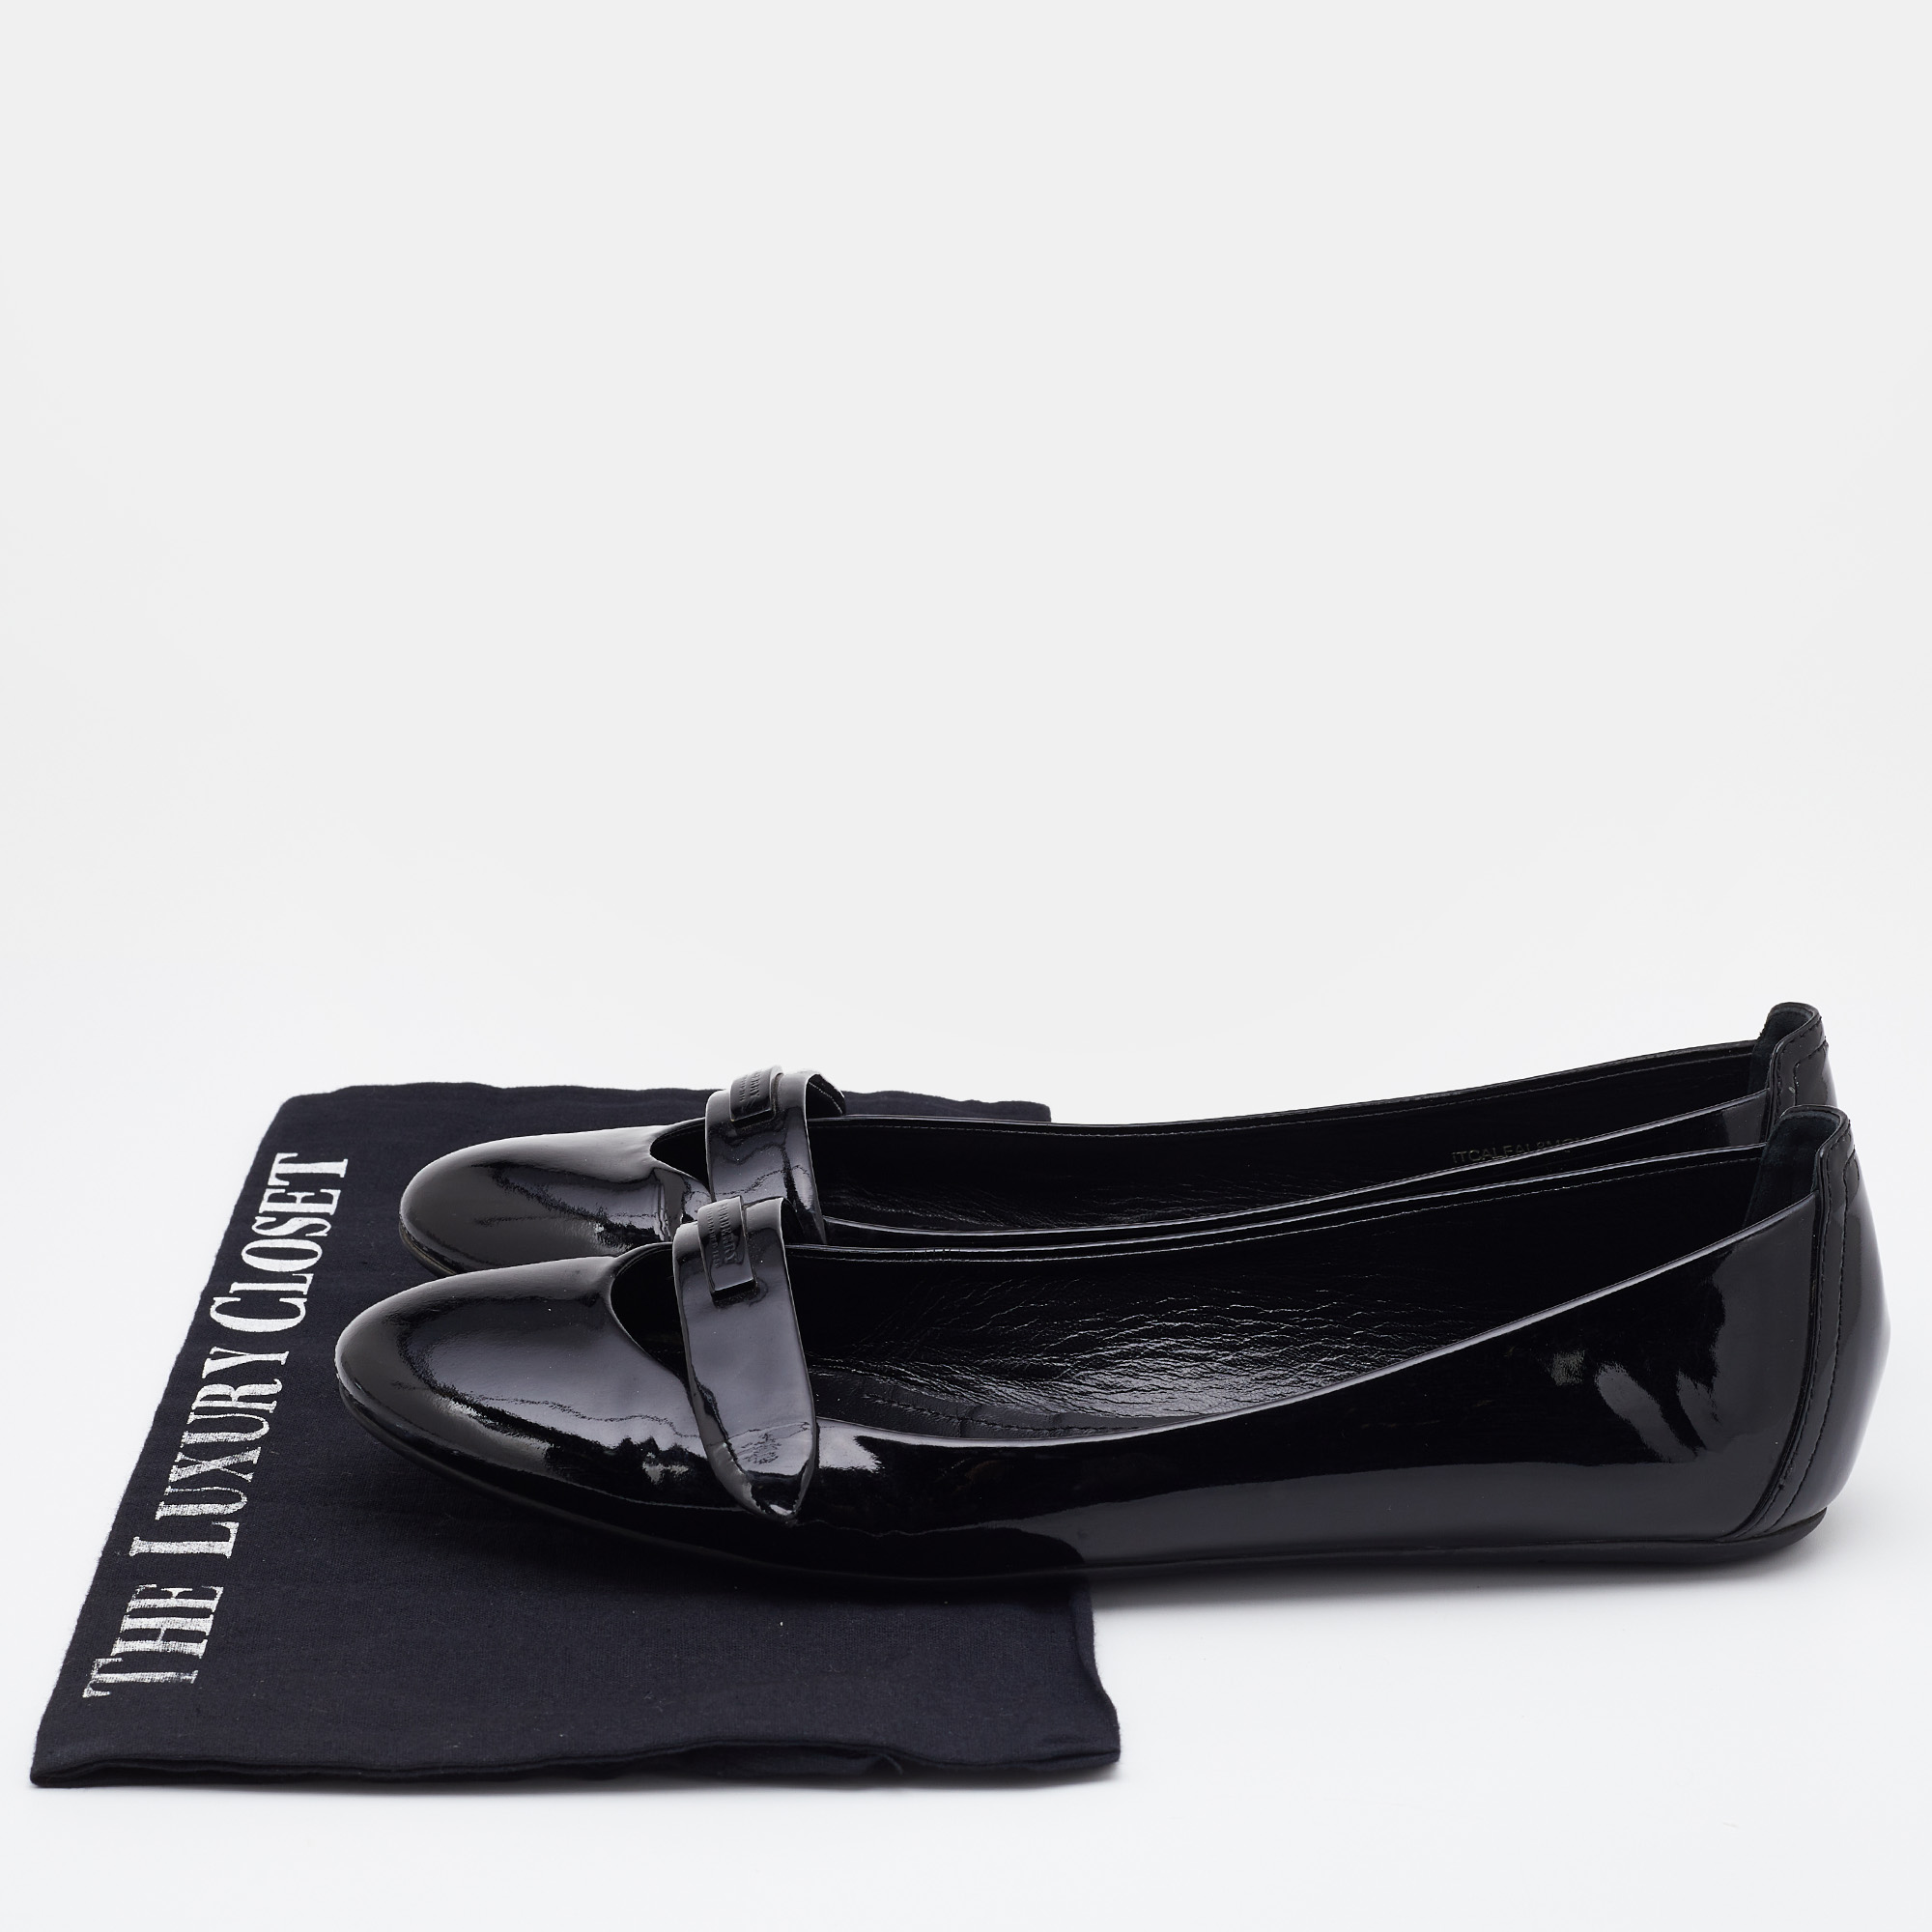 Burberry Black Patent Leather Ballet Flats Size 40